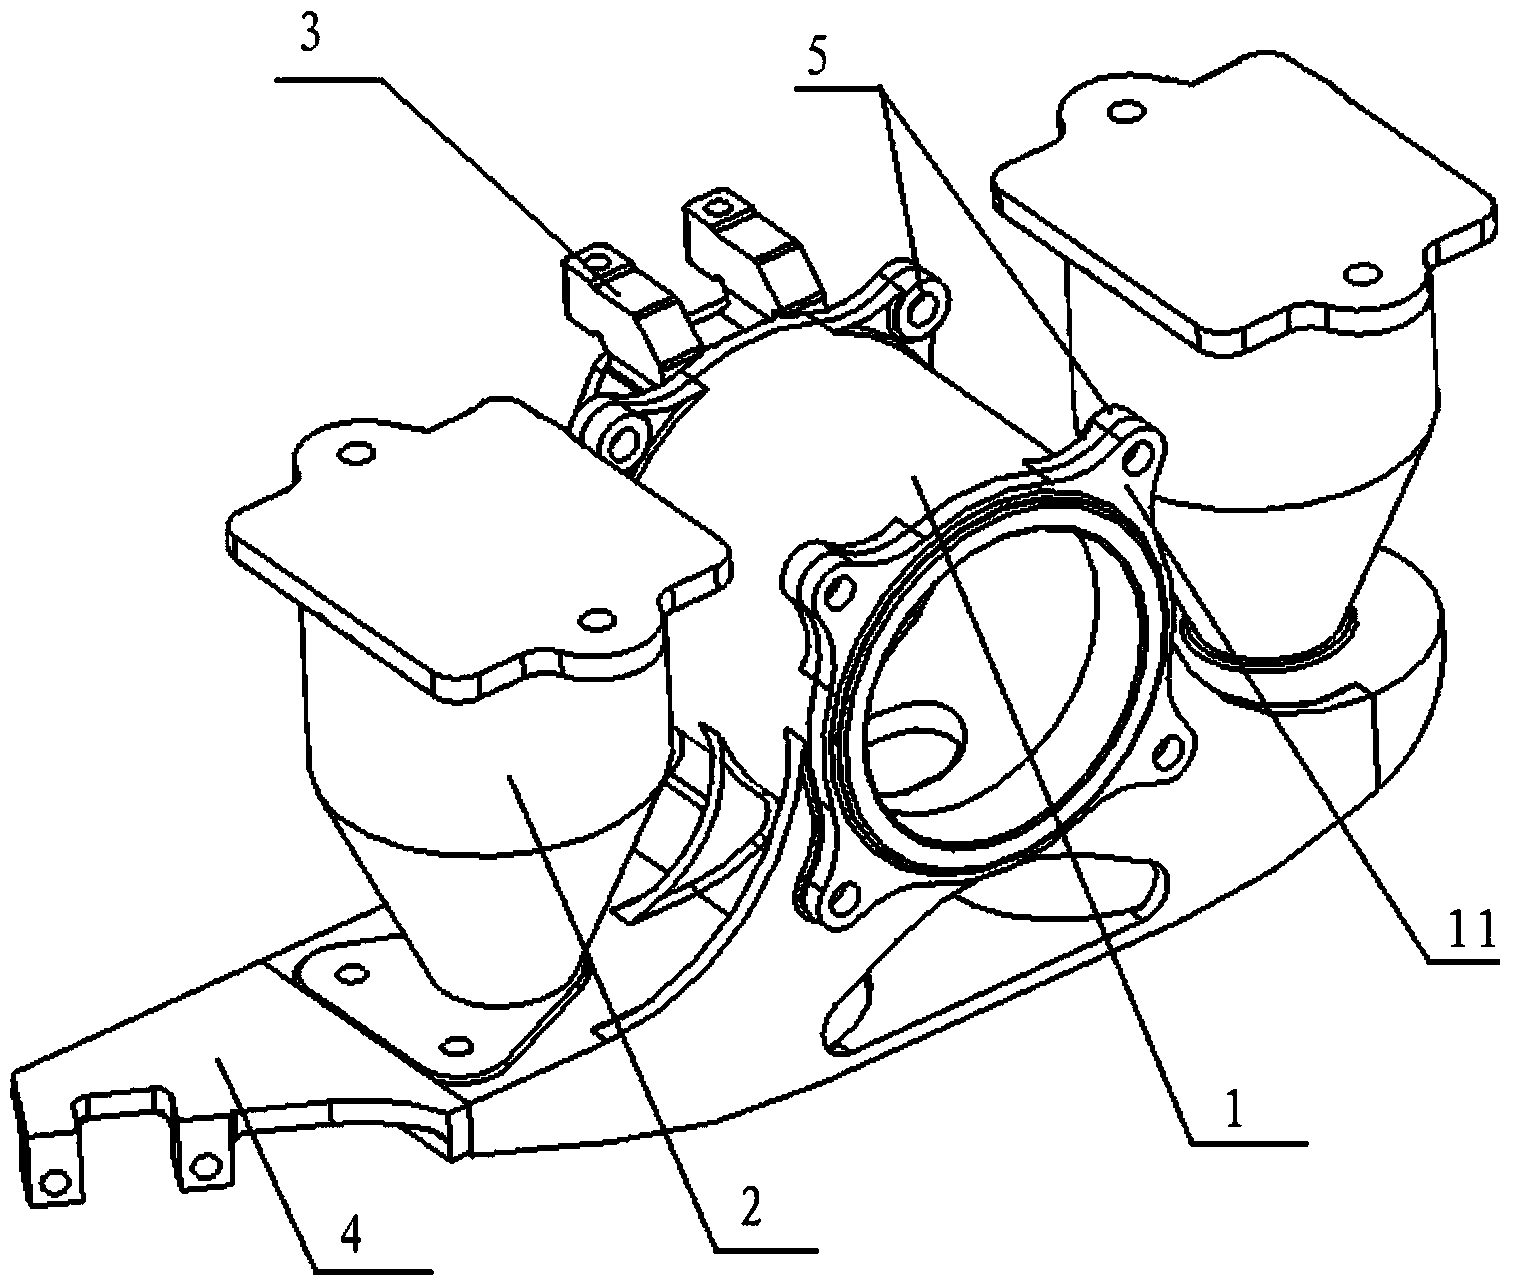 Bogie axle box suspension device